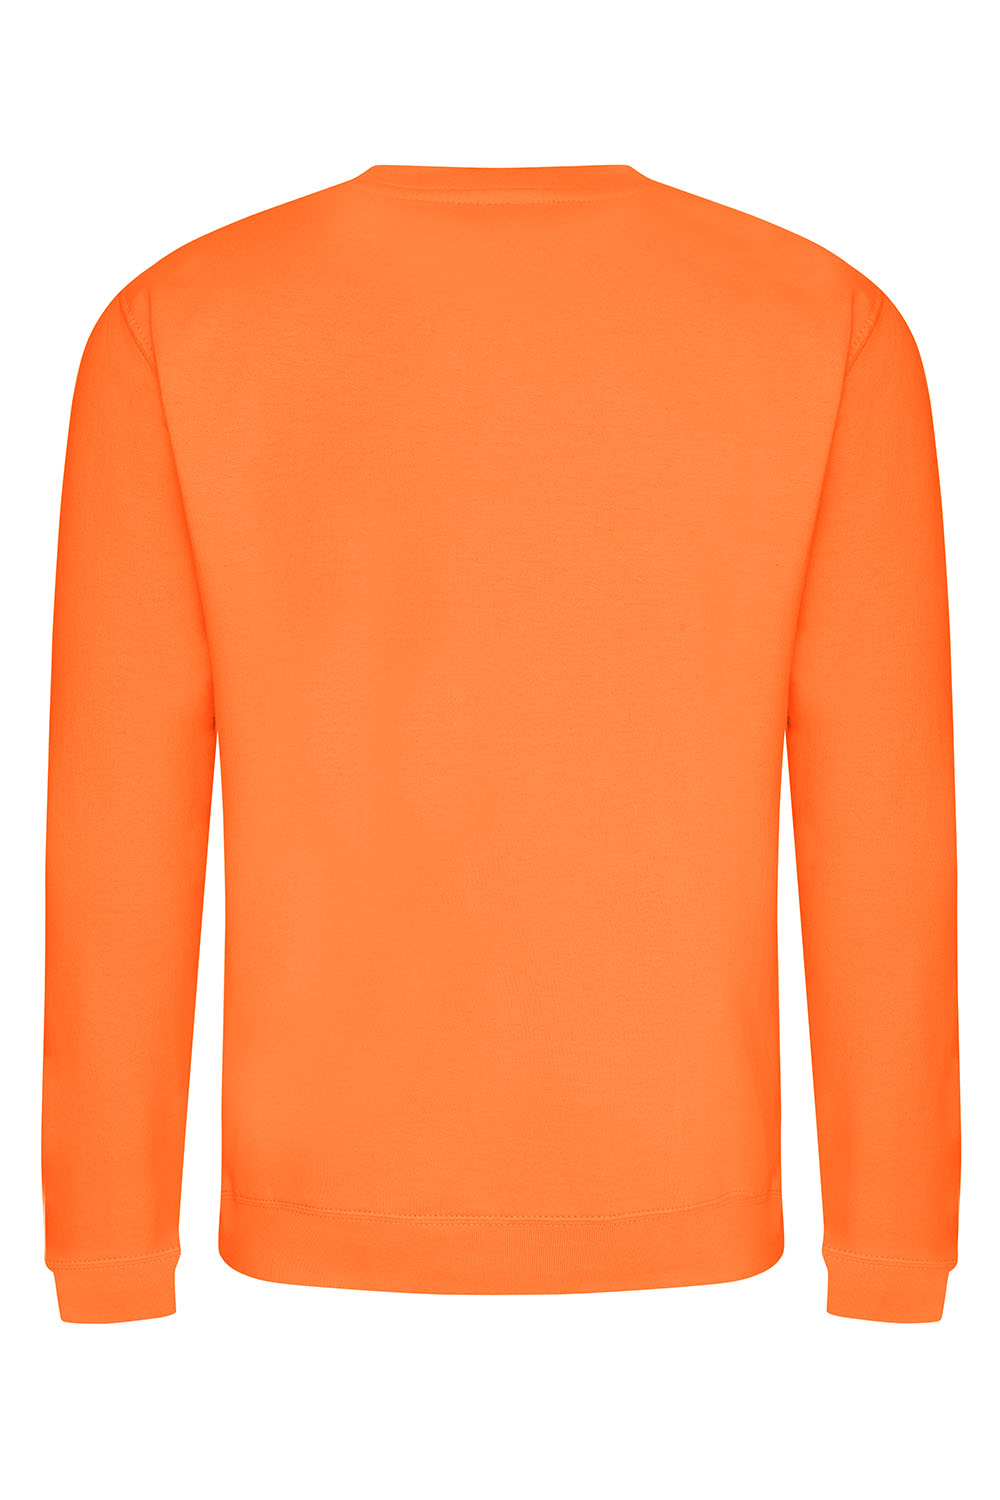 Plain Sweatshirt In Orange Crush (Single).